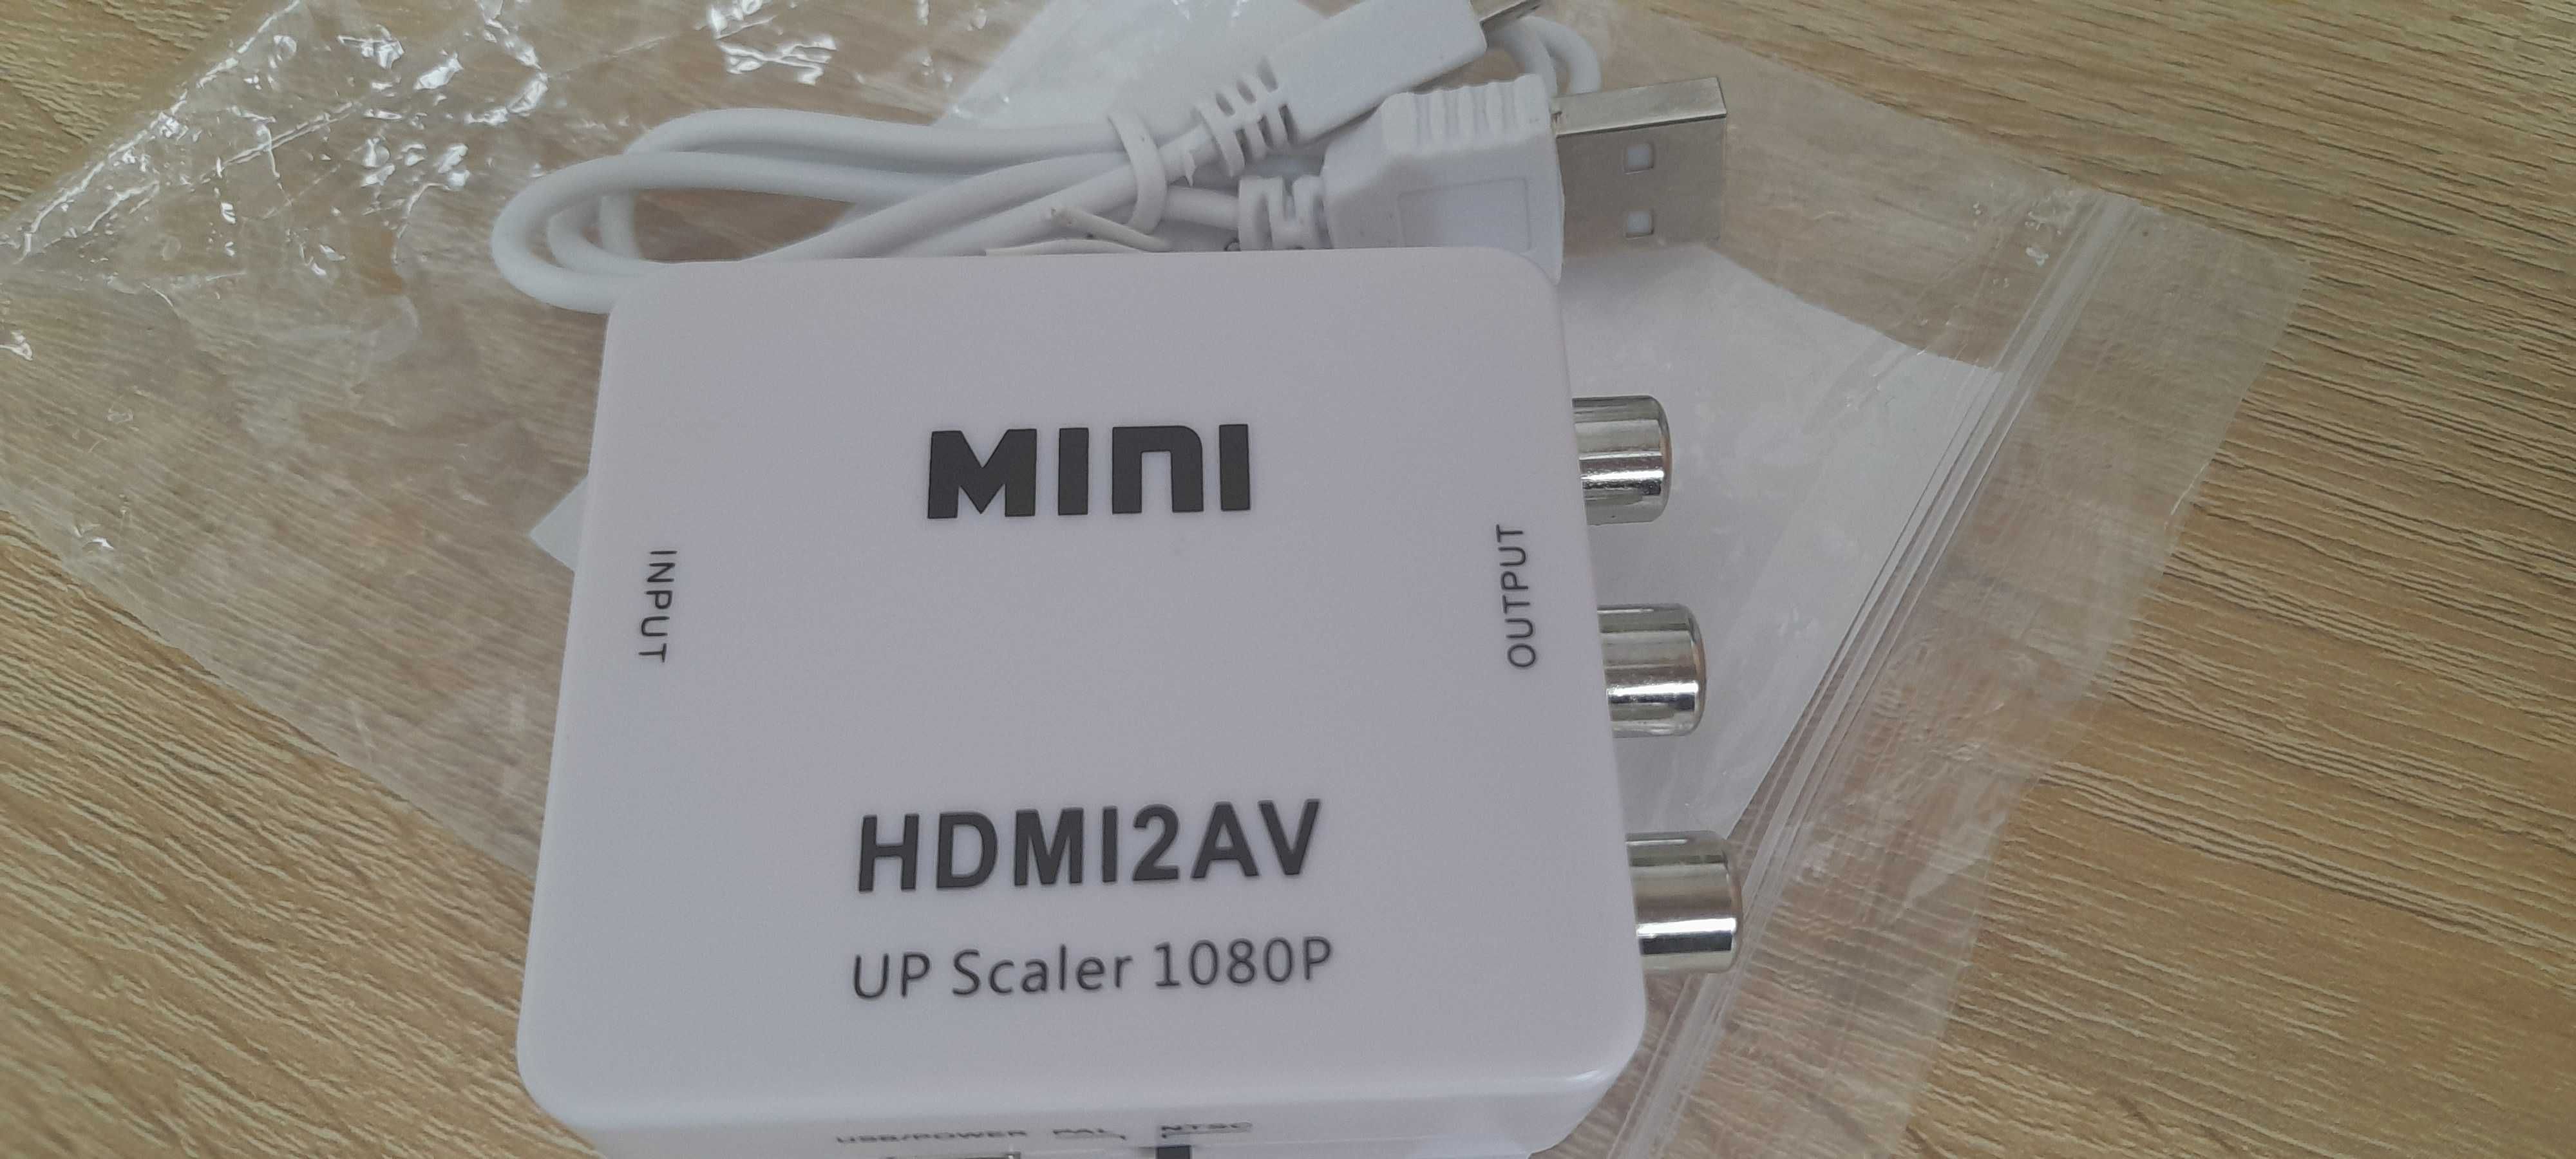 Видео конвертер mini HDMI2AV